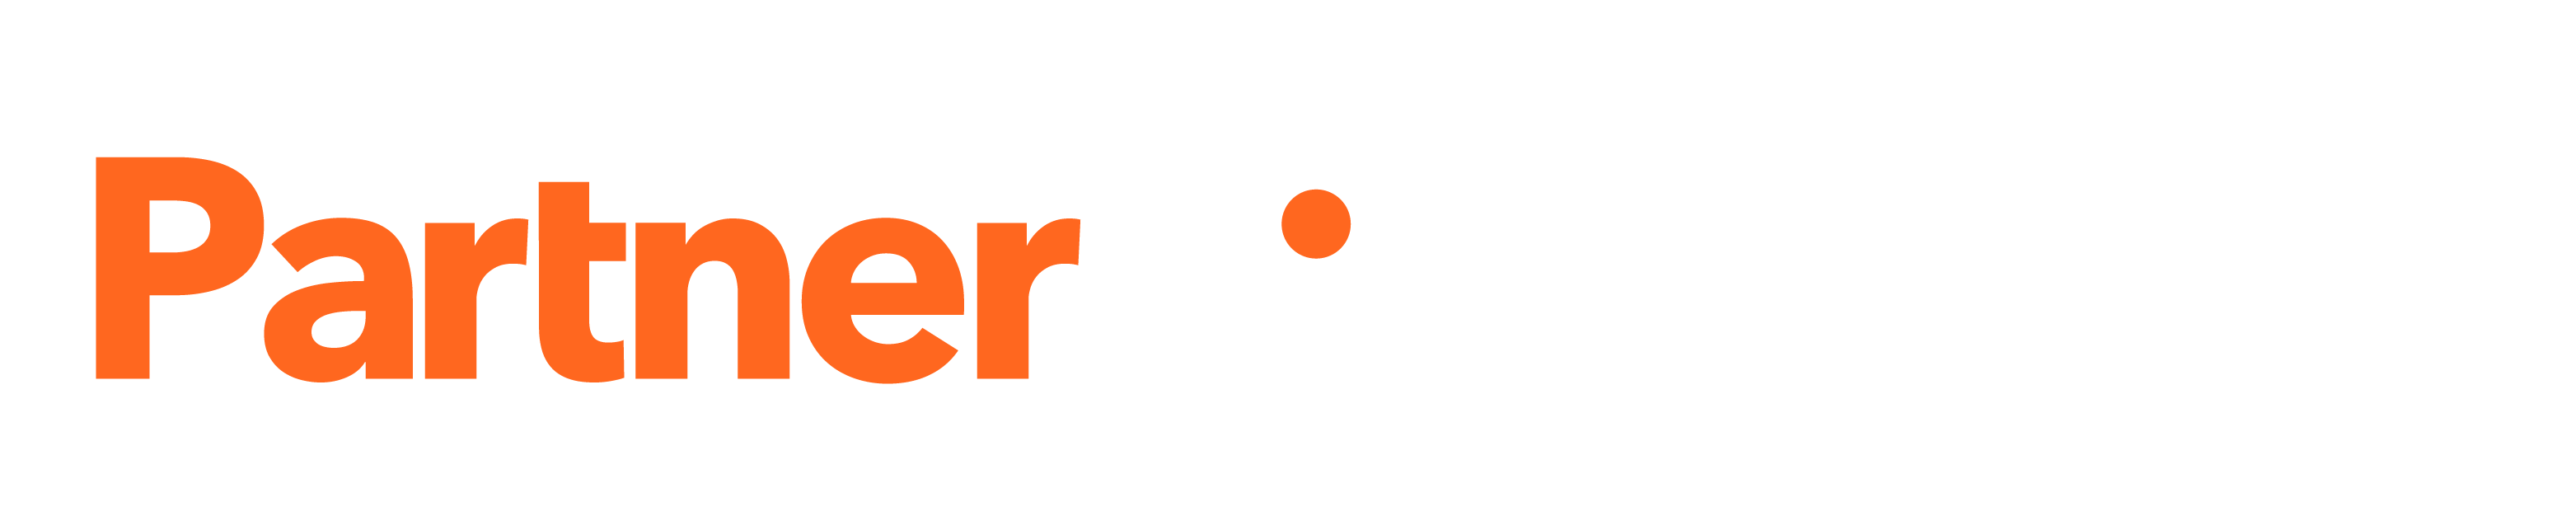 Partner-Xchange_Logo_Orange-White